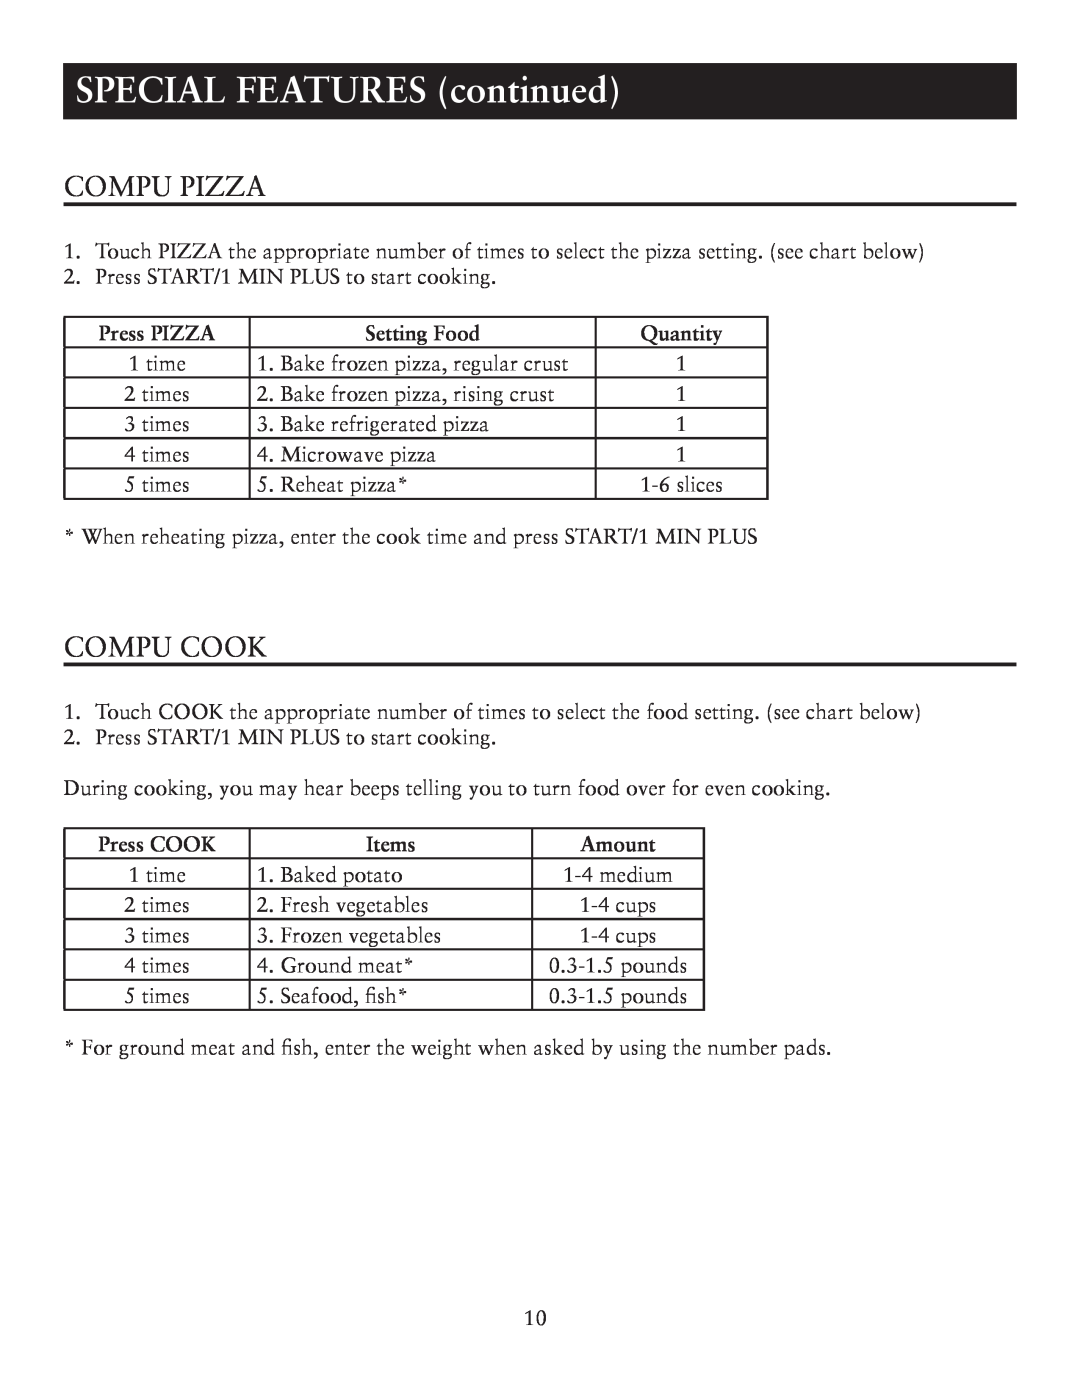 Oster OTM1101VBS SPECIAL FEATURES continued, Compu Pizza, Compu Cook, Press PIZZA, Setting Food, Quantity, Press COOK 